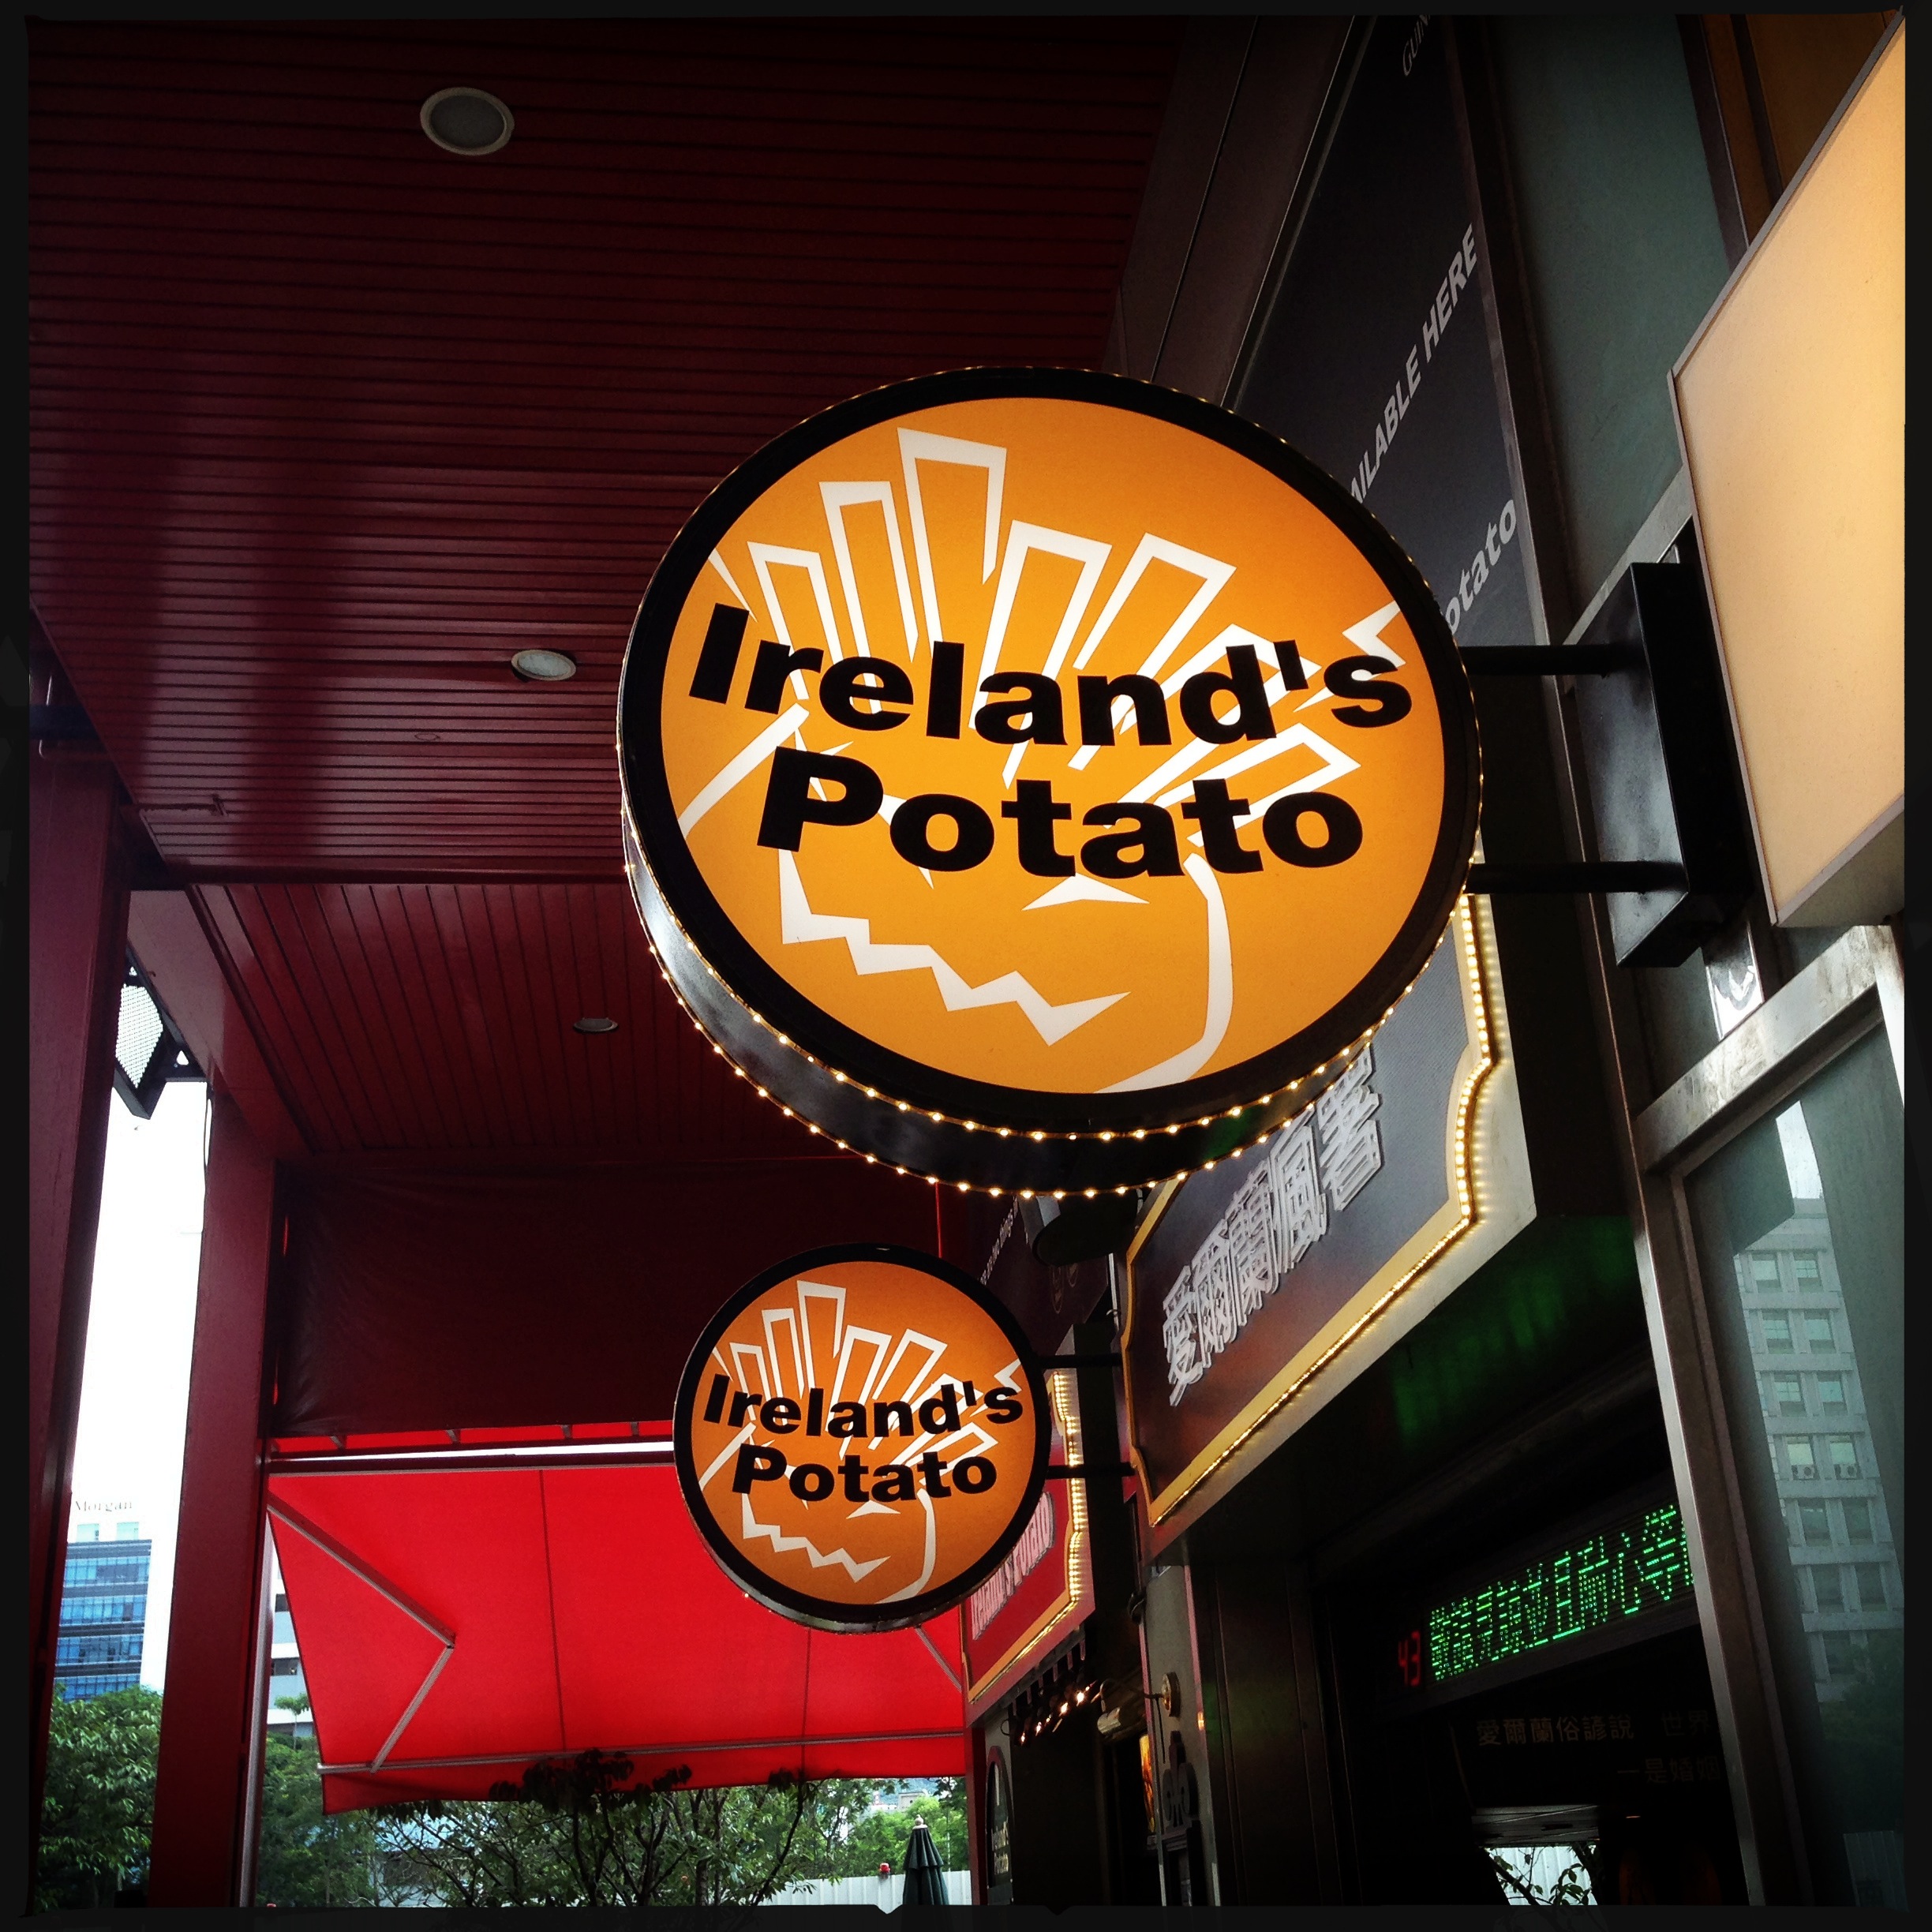 Ireland's potato (Taipei)